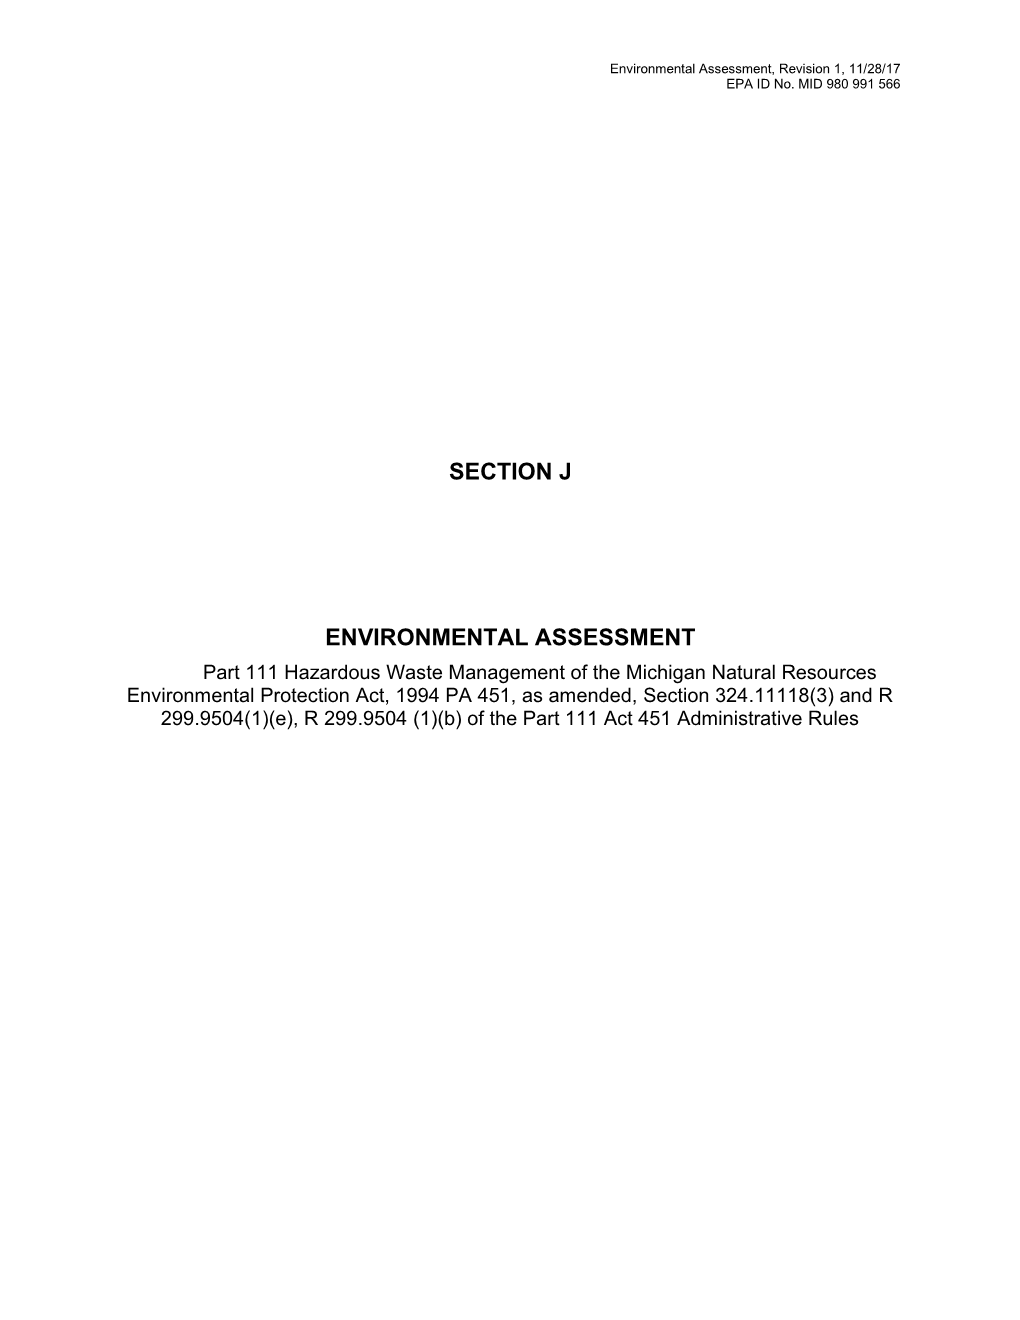 Environmental Assessment, Revision 1, 11/28/17 EPA ID No